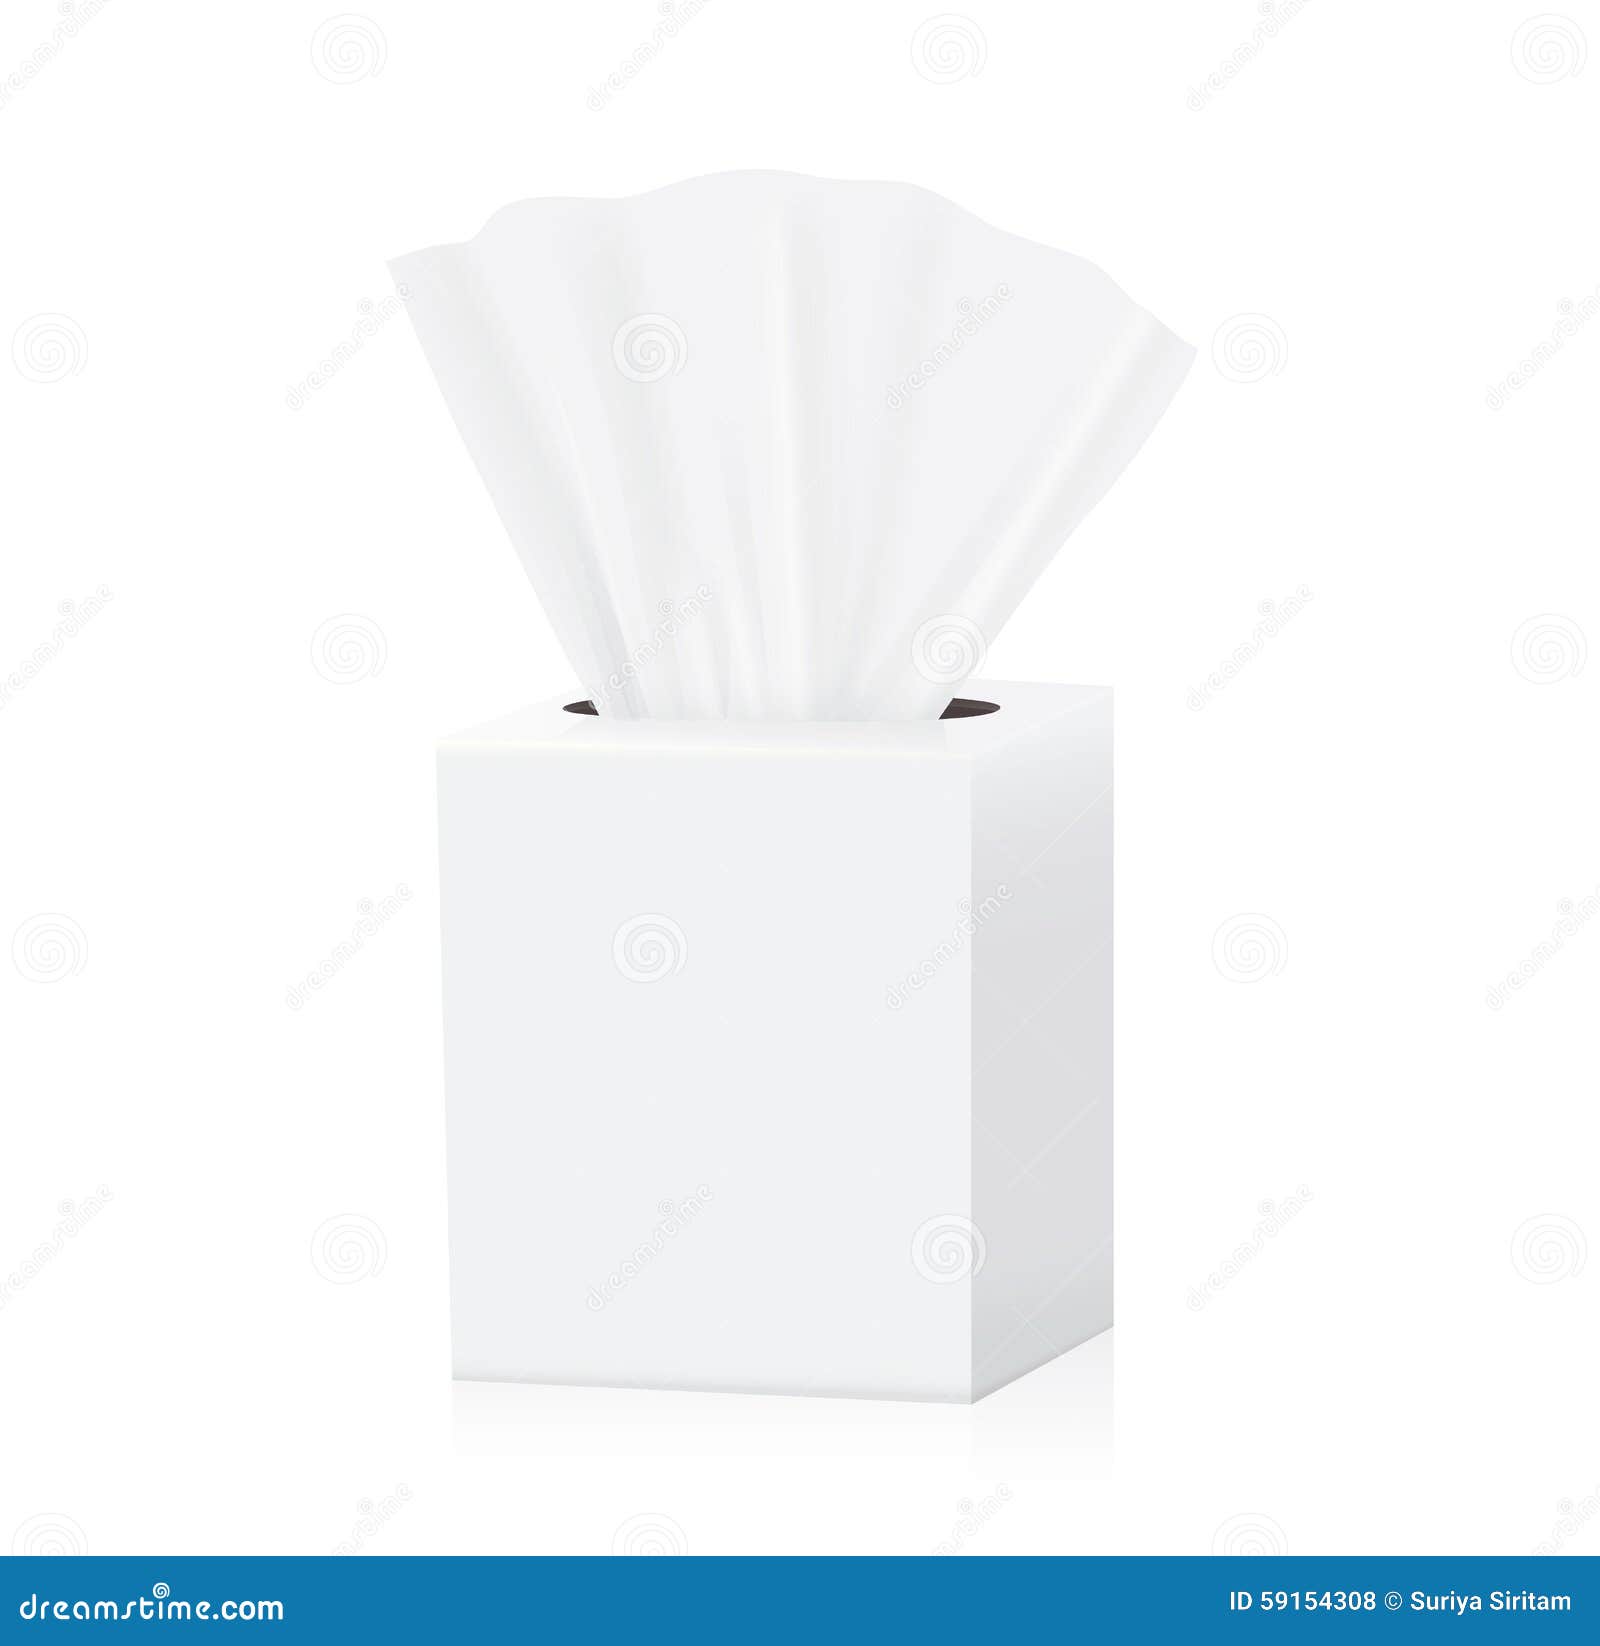 Download Free Mockup Tissue Paper / 26+ Tissue Paper Mockup Design ...